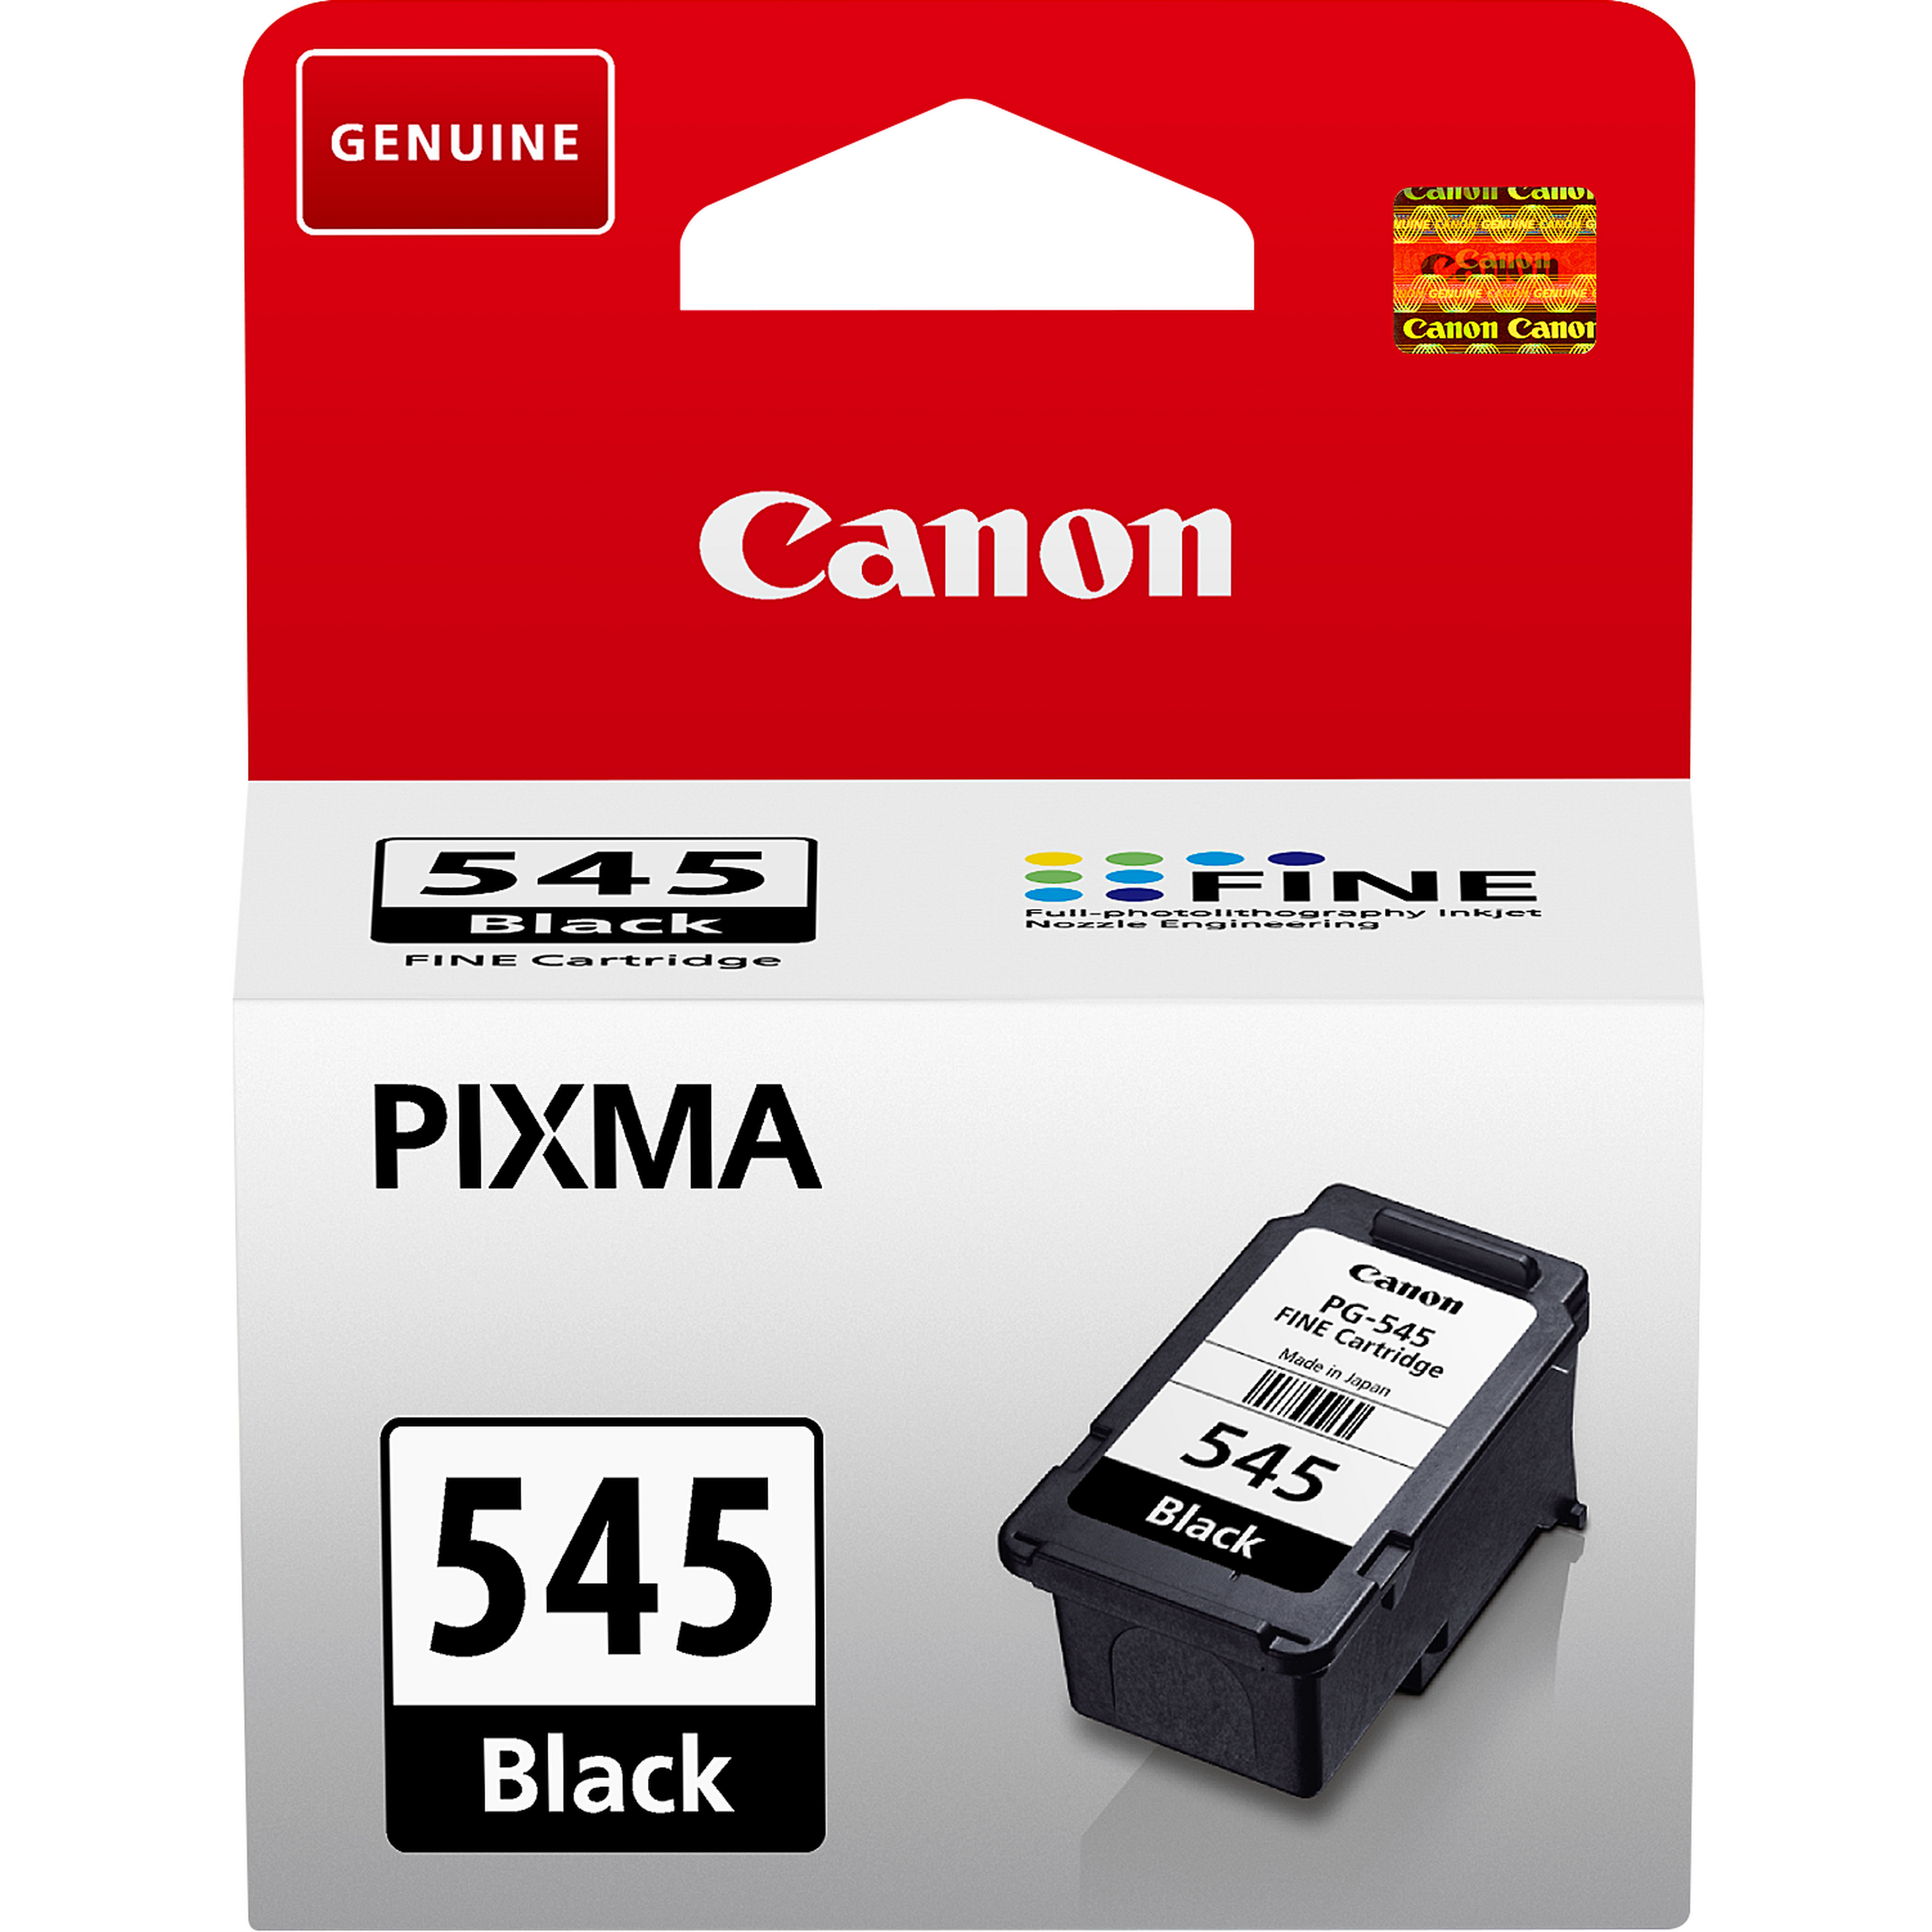 Canon pg 445 картридж для принтера купить. Картриджи 445 446 для Canon. Canon PG-445 (8283b001). Картридж струйный Canon PG-445. Картридж струйный Canon CL-446.